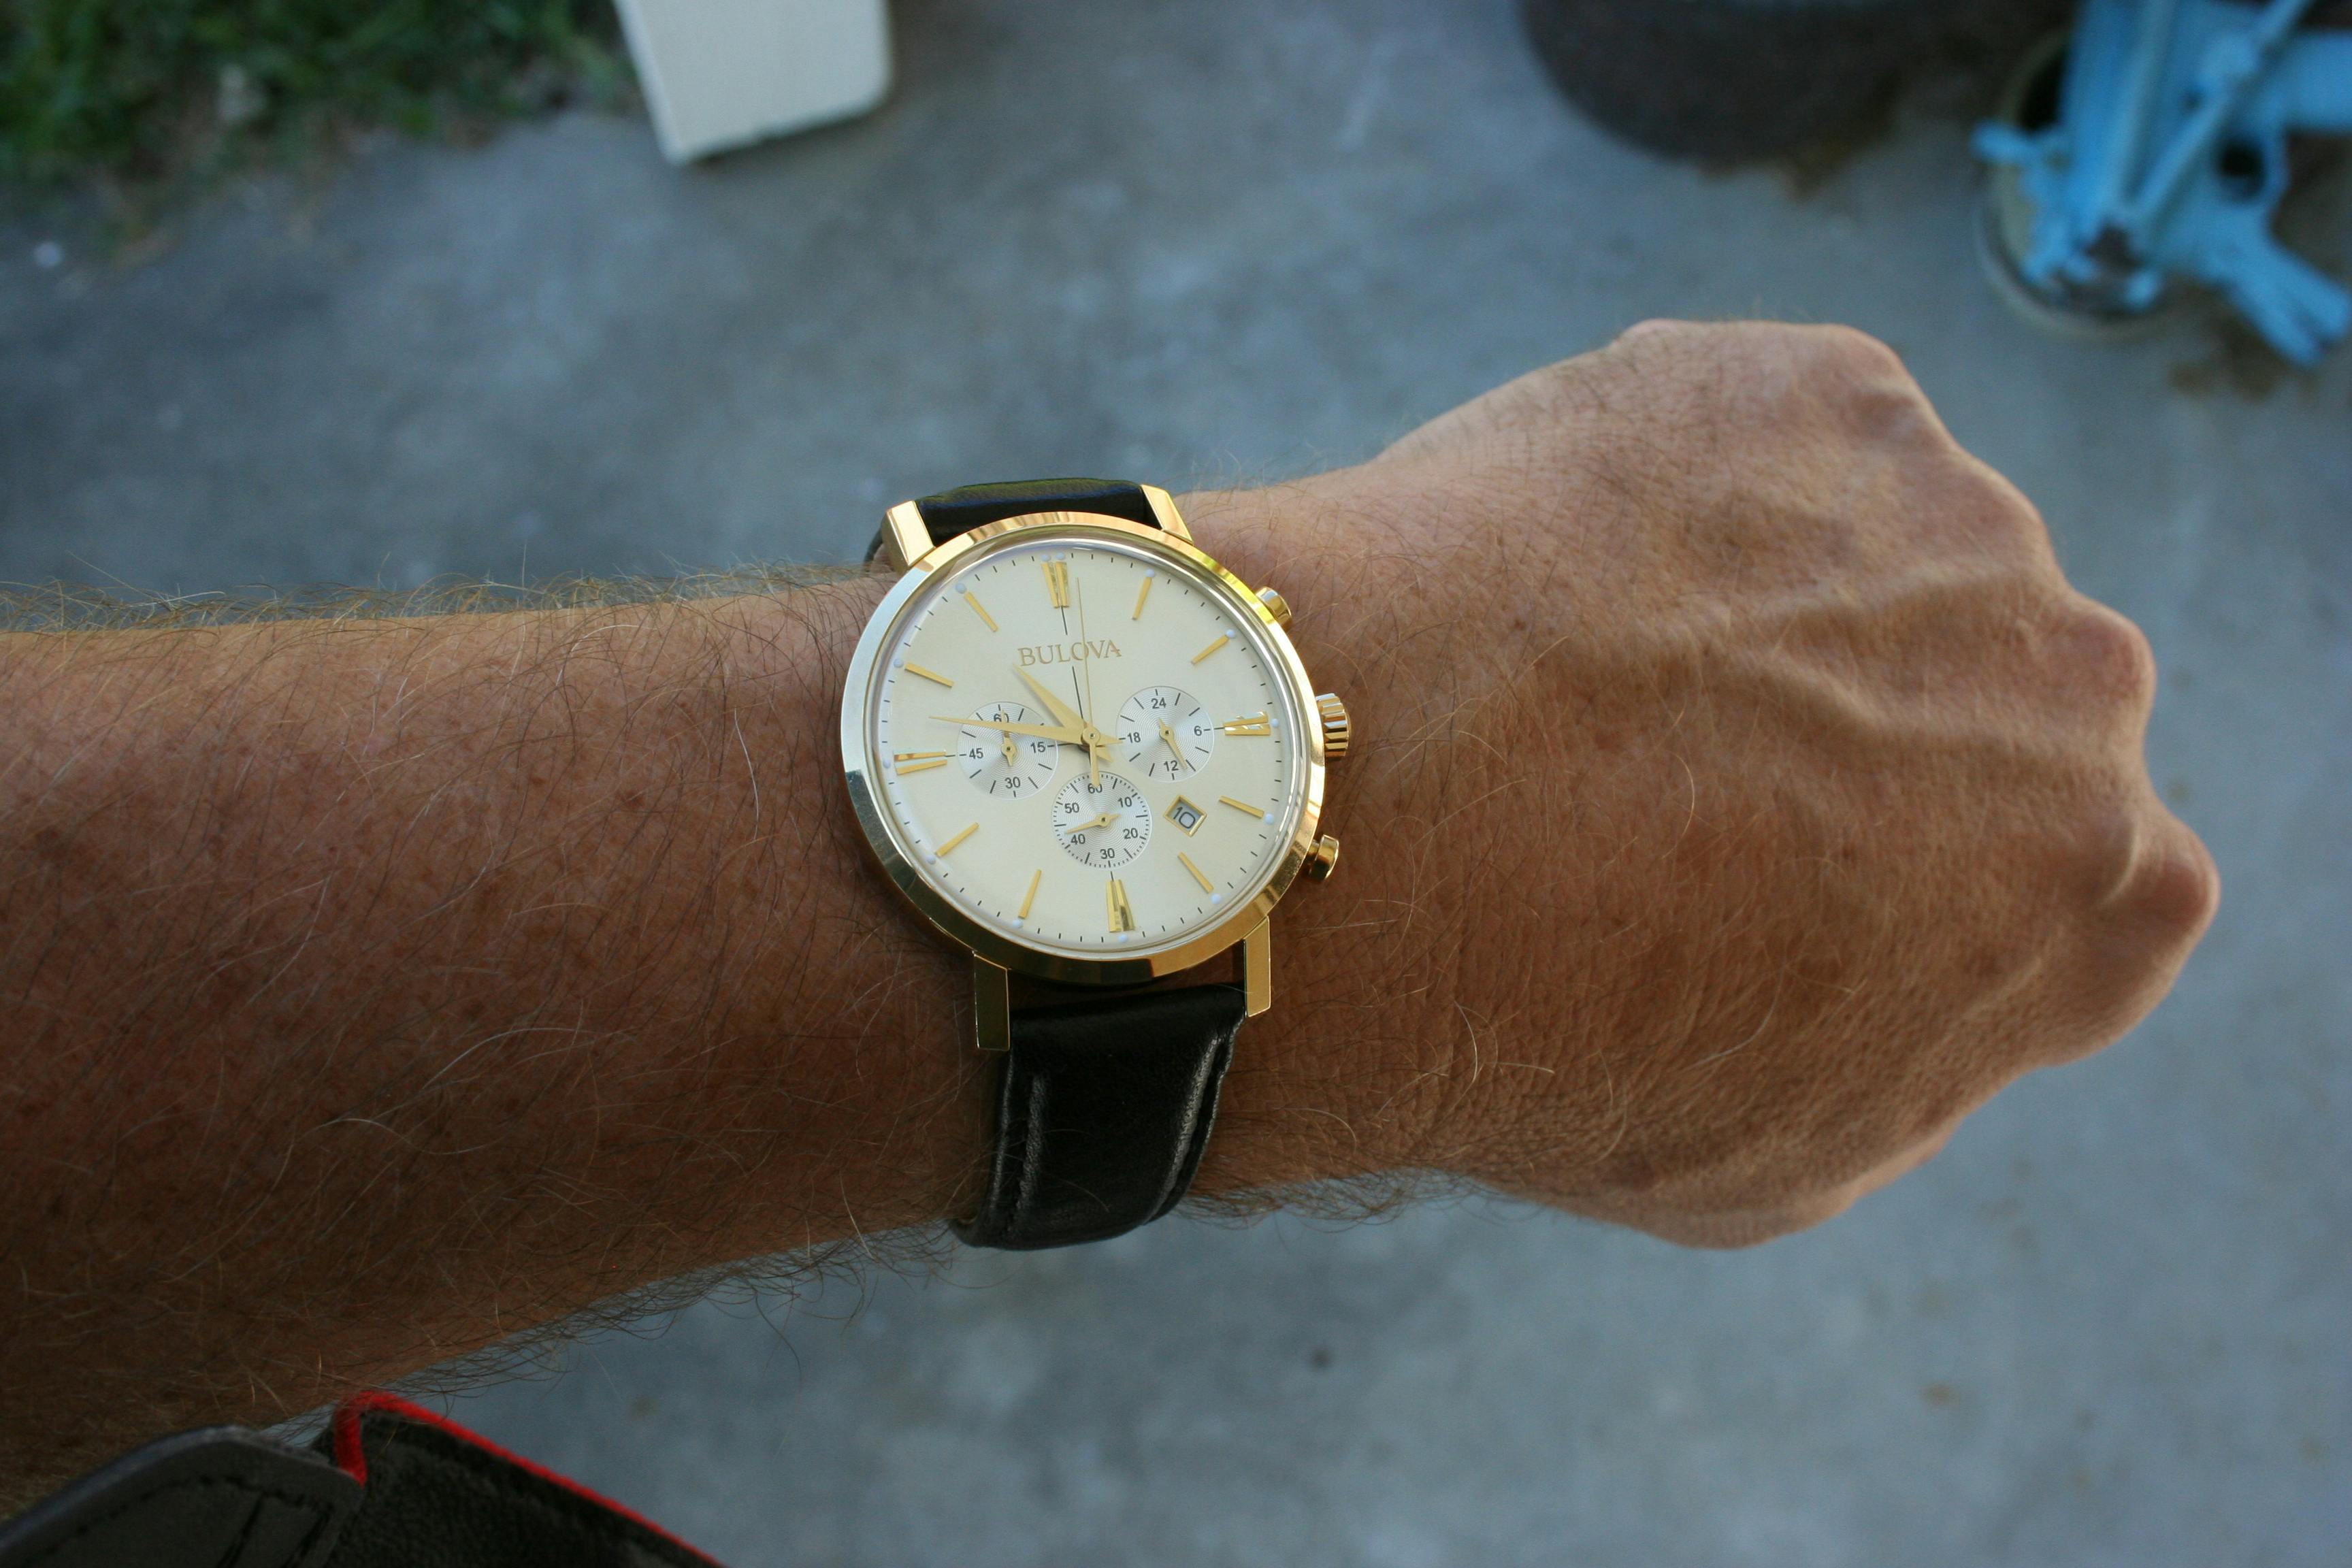 Free stock photo of Bulova, chronograph, gold watch